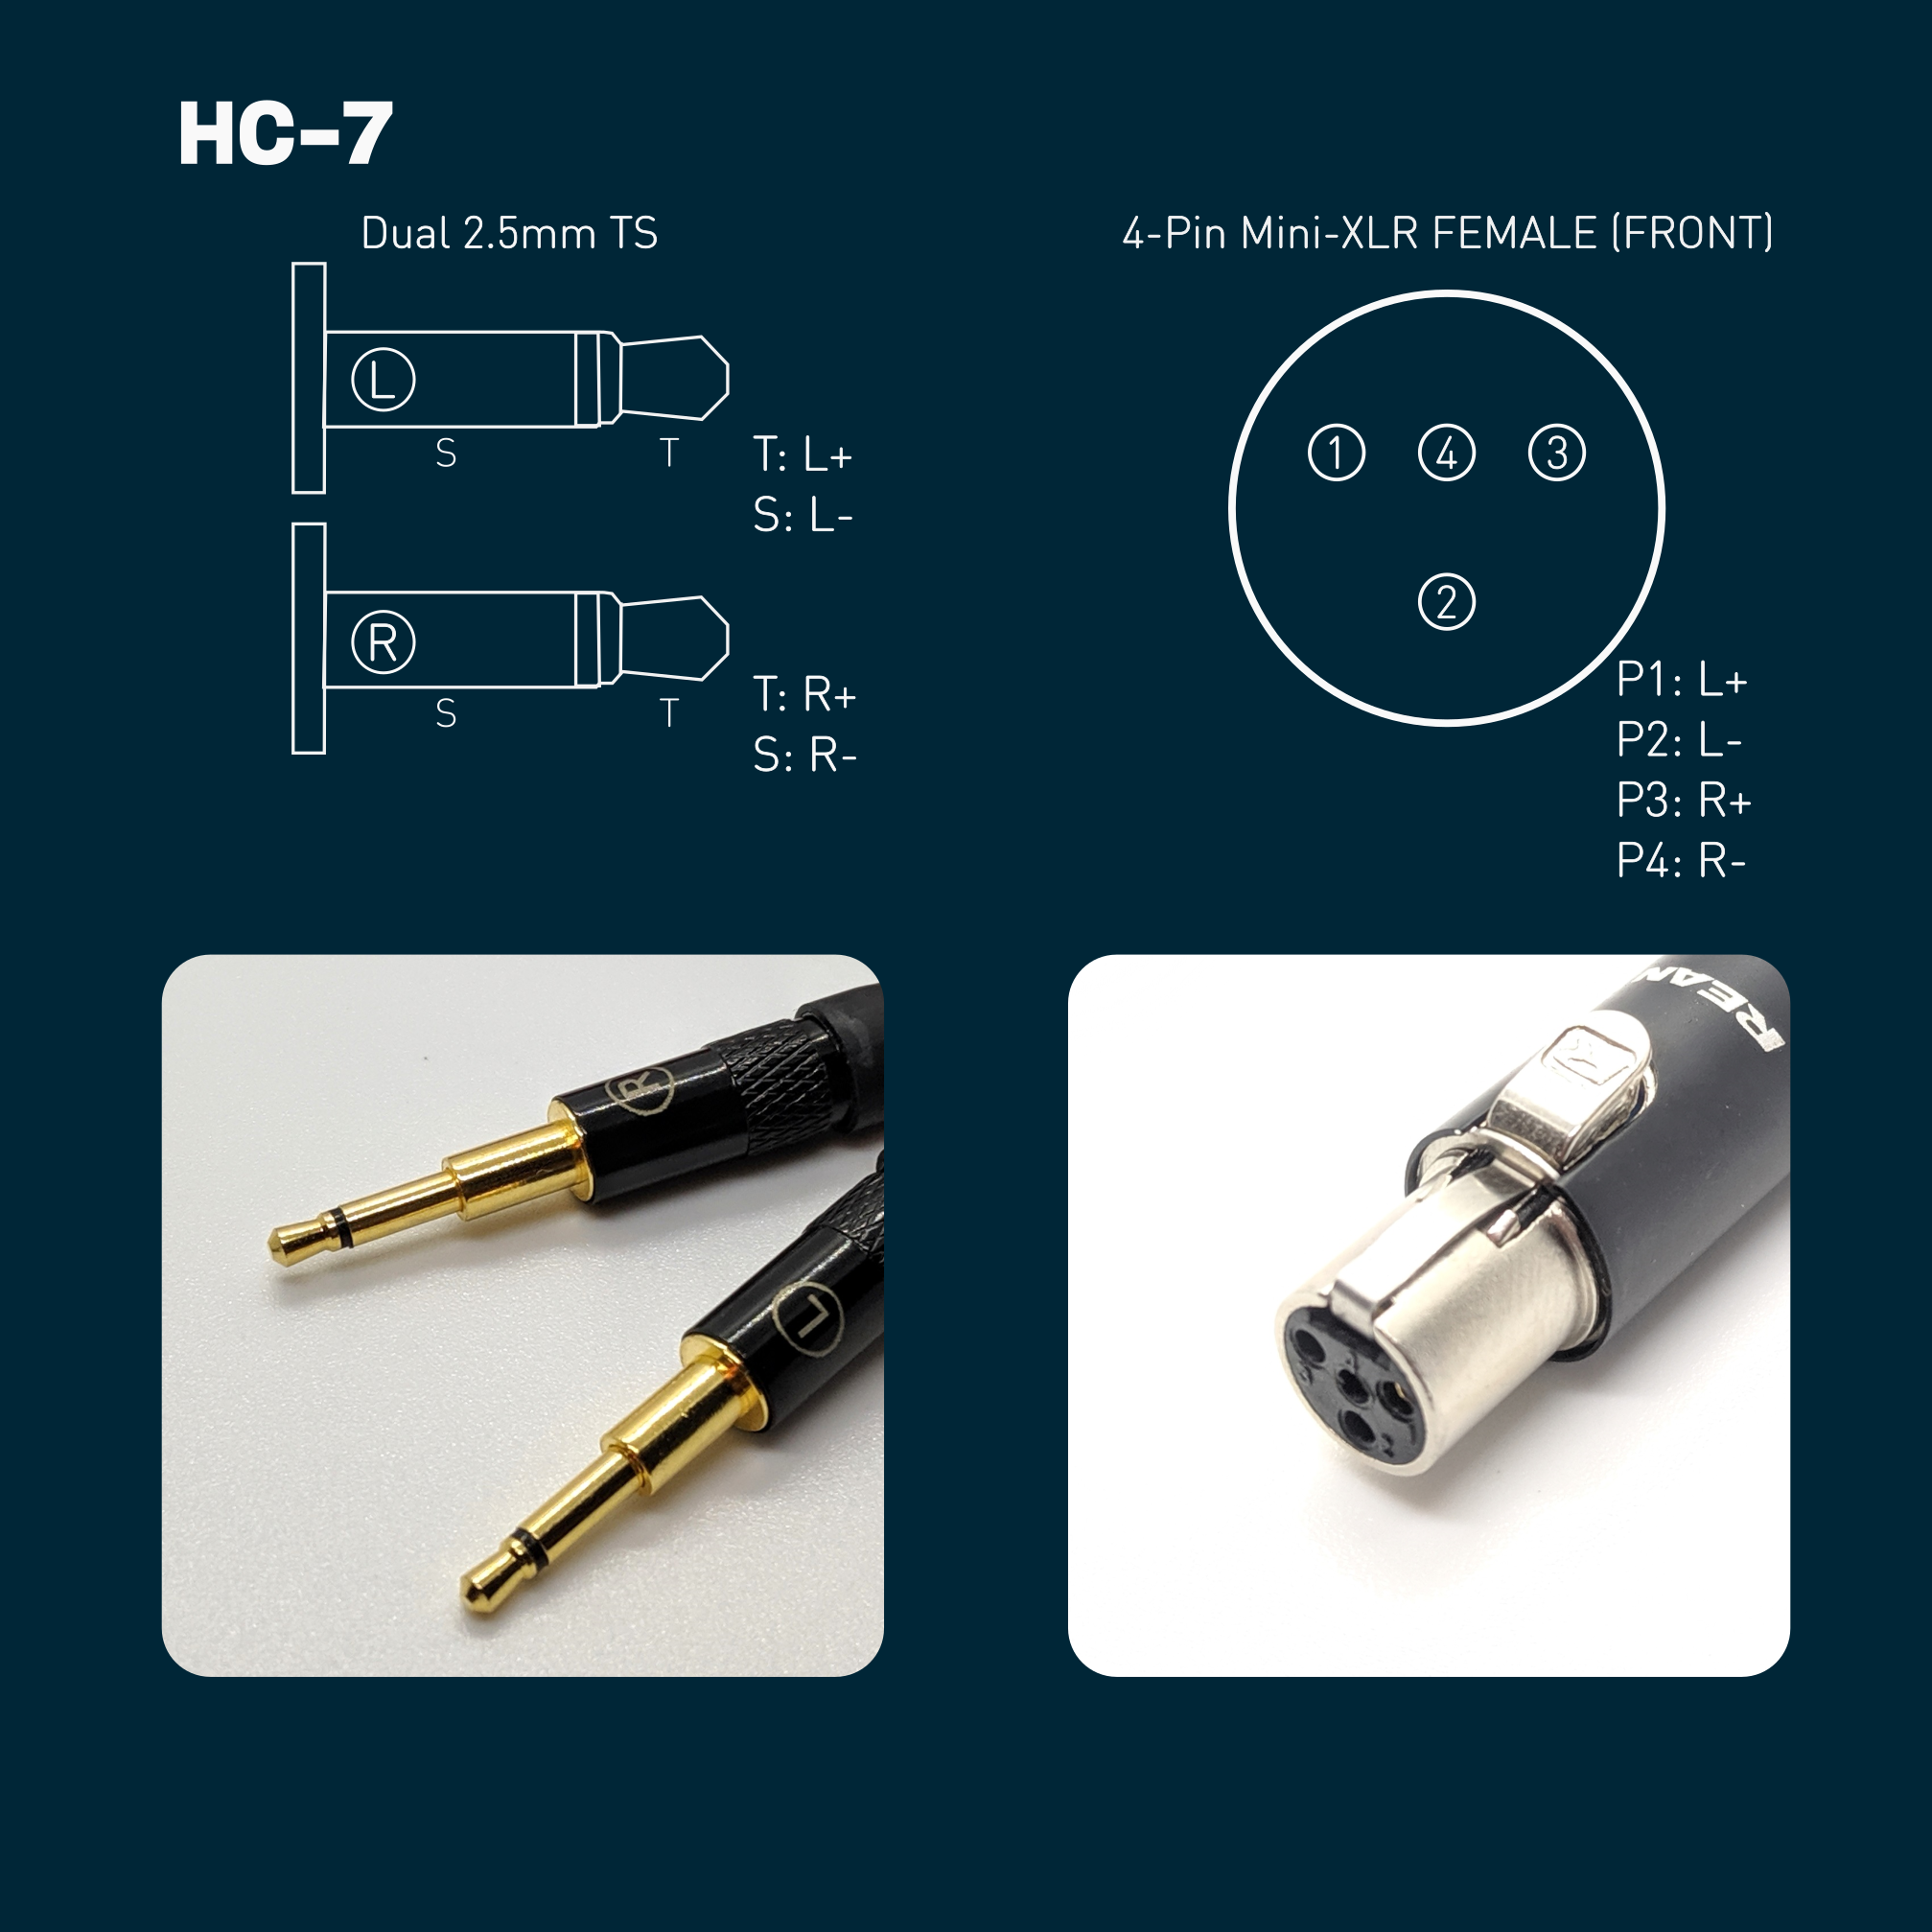 HC-7: Dual 2.5mm Mono TS Balanced Headphone Cable